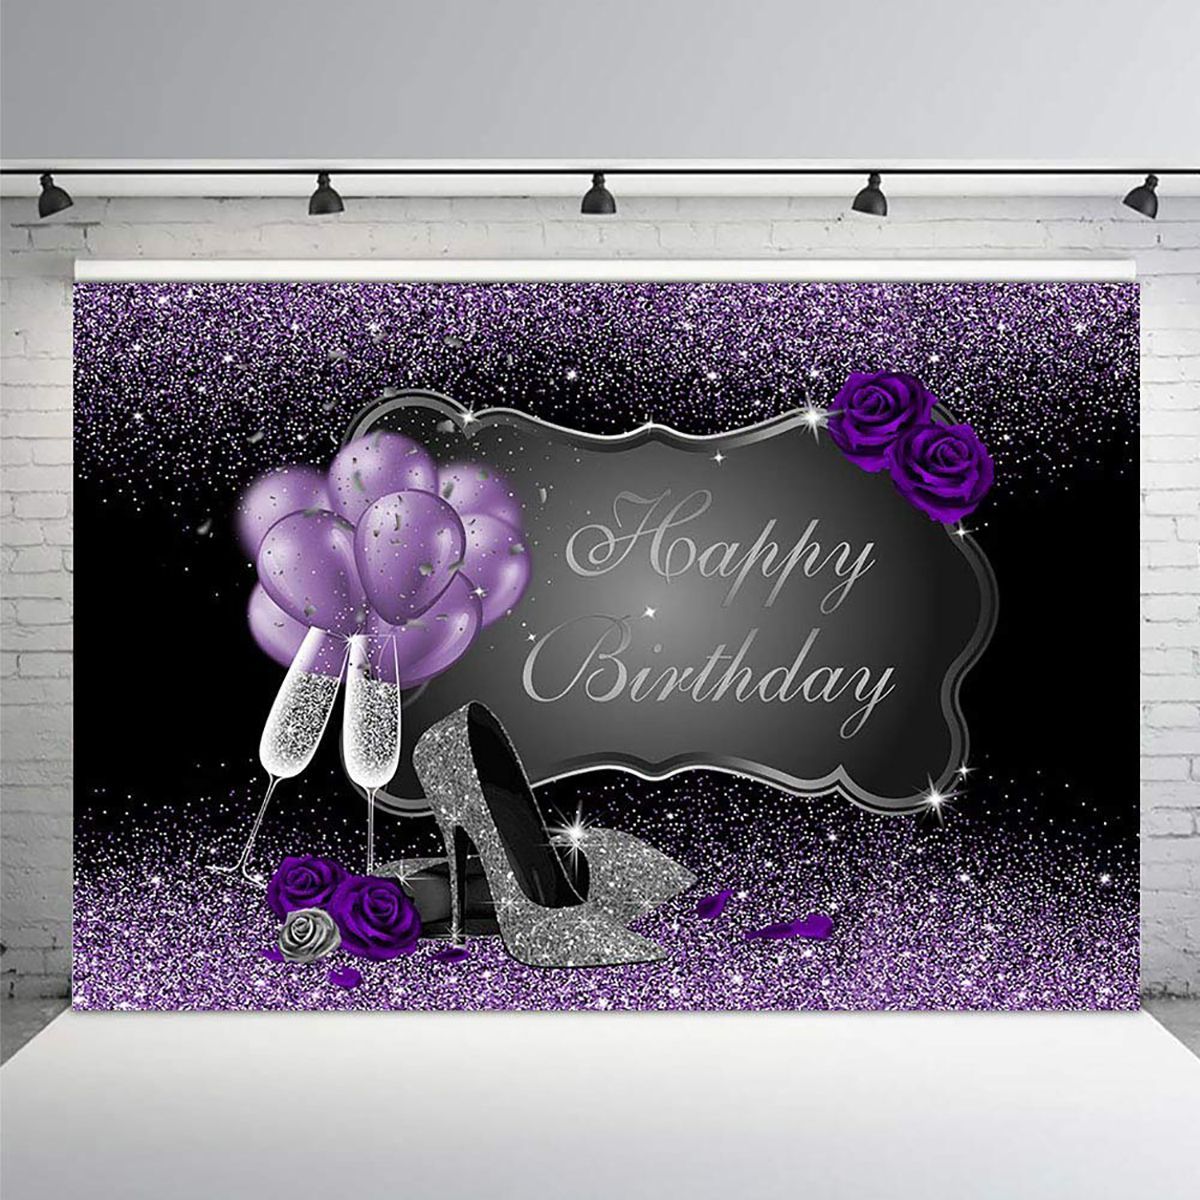 5x3FT-7x5FT-8x6FT-Purple-Rose-Balloon-Sliver-Happy-Birthday-Photography-Backdrop-Background-Studio-P-1618208